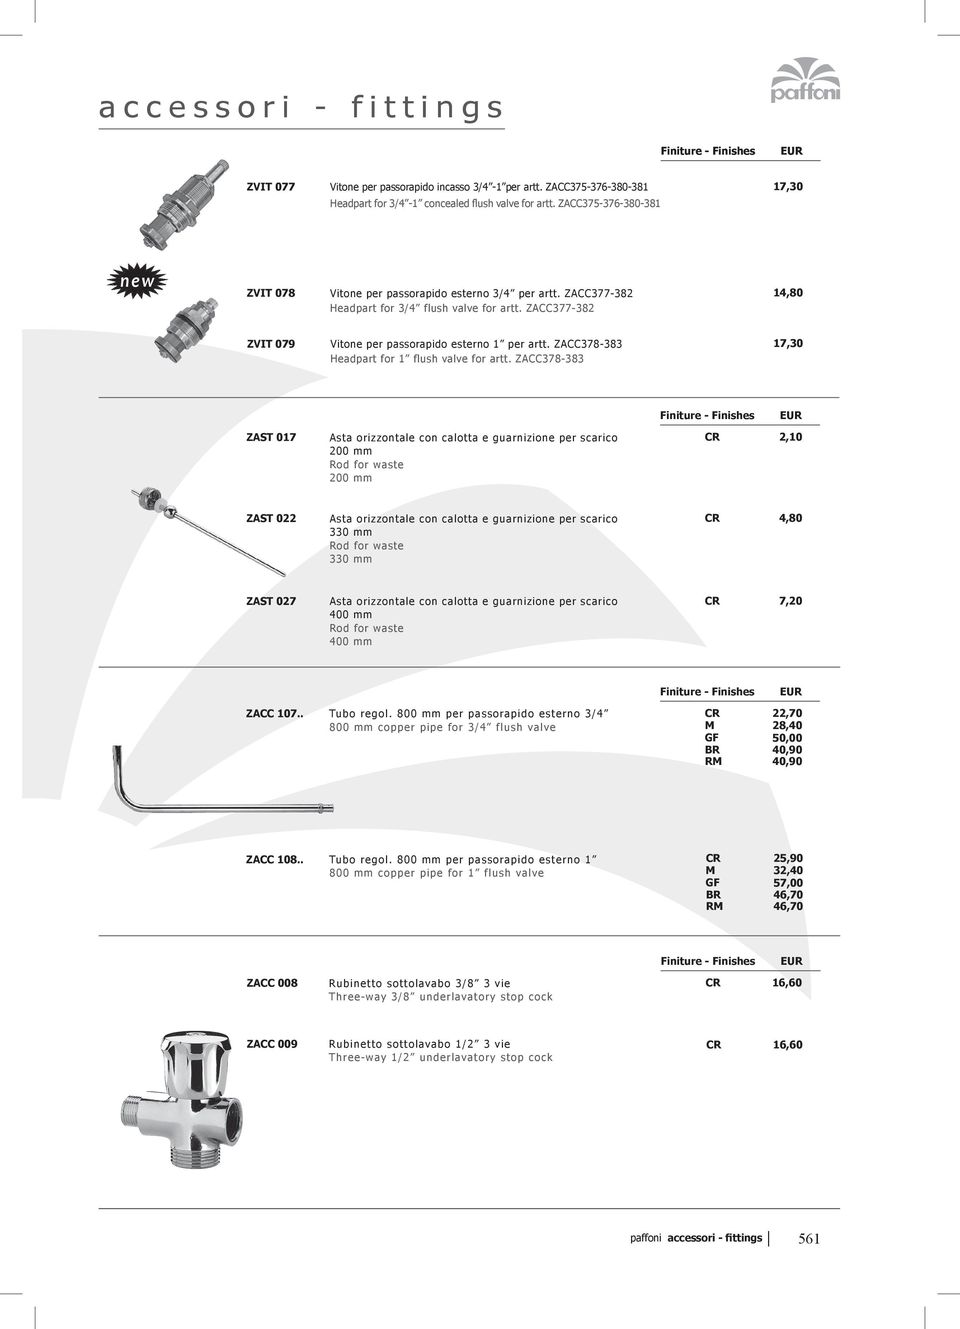 ZACC377-382 14,80 ZVIT 079 Vitone per passorapido esterno 1 per artt. ZACC378-383 Headpart for 1 flush valve for artt.